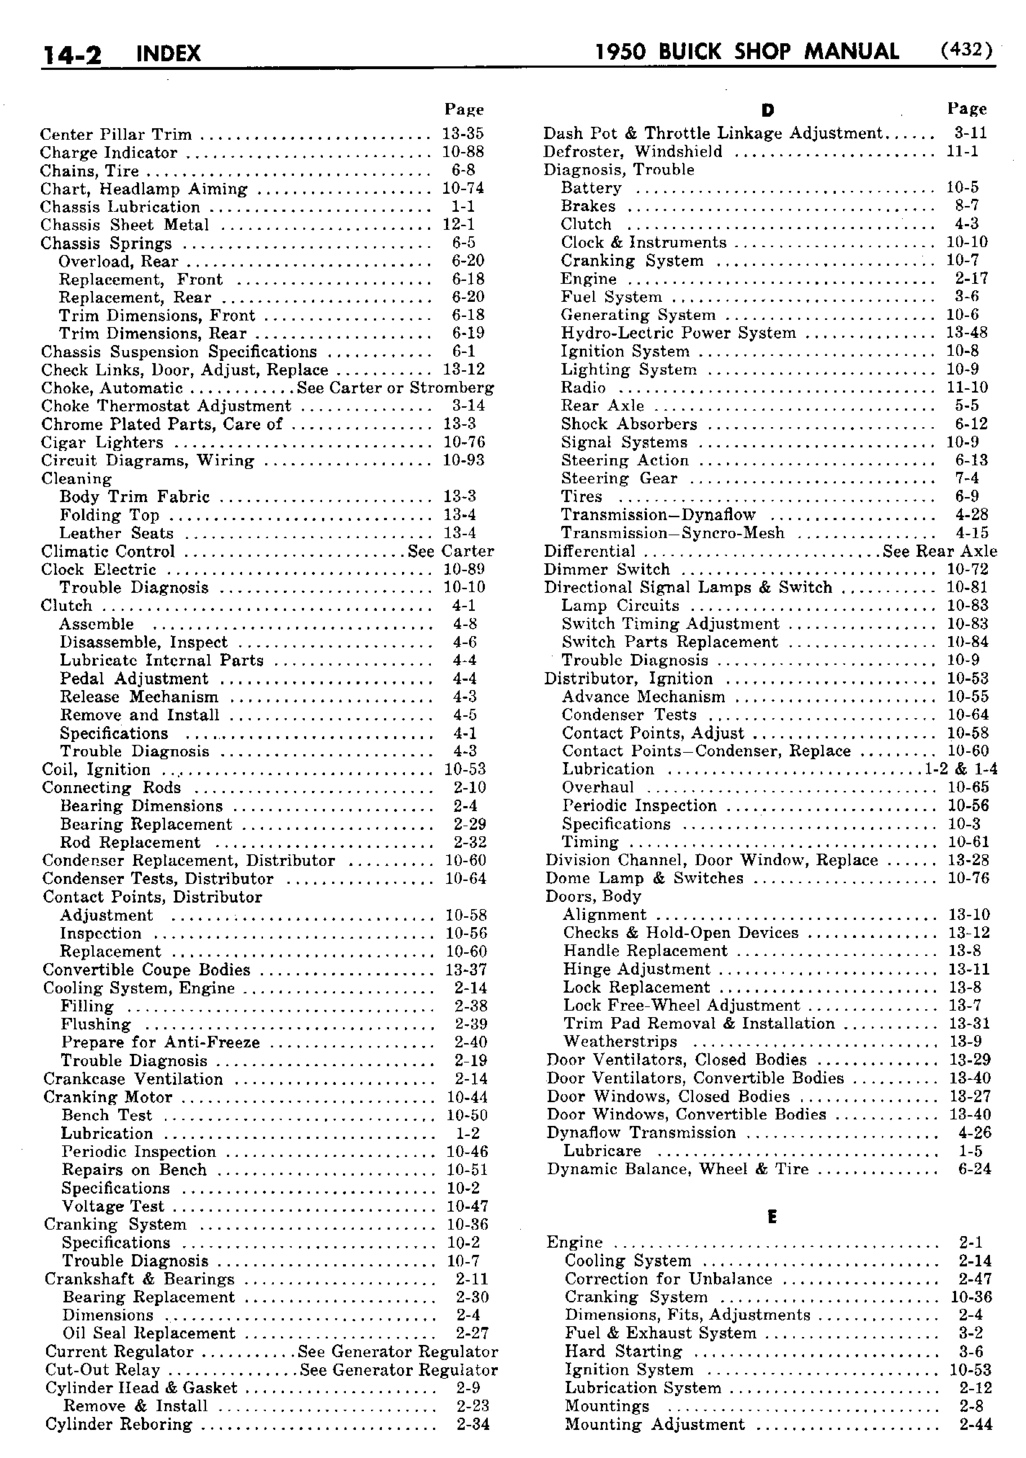 n_15 1950 Buick Shop Manual - Index-002-002.jpg